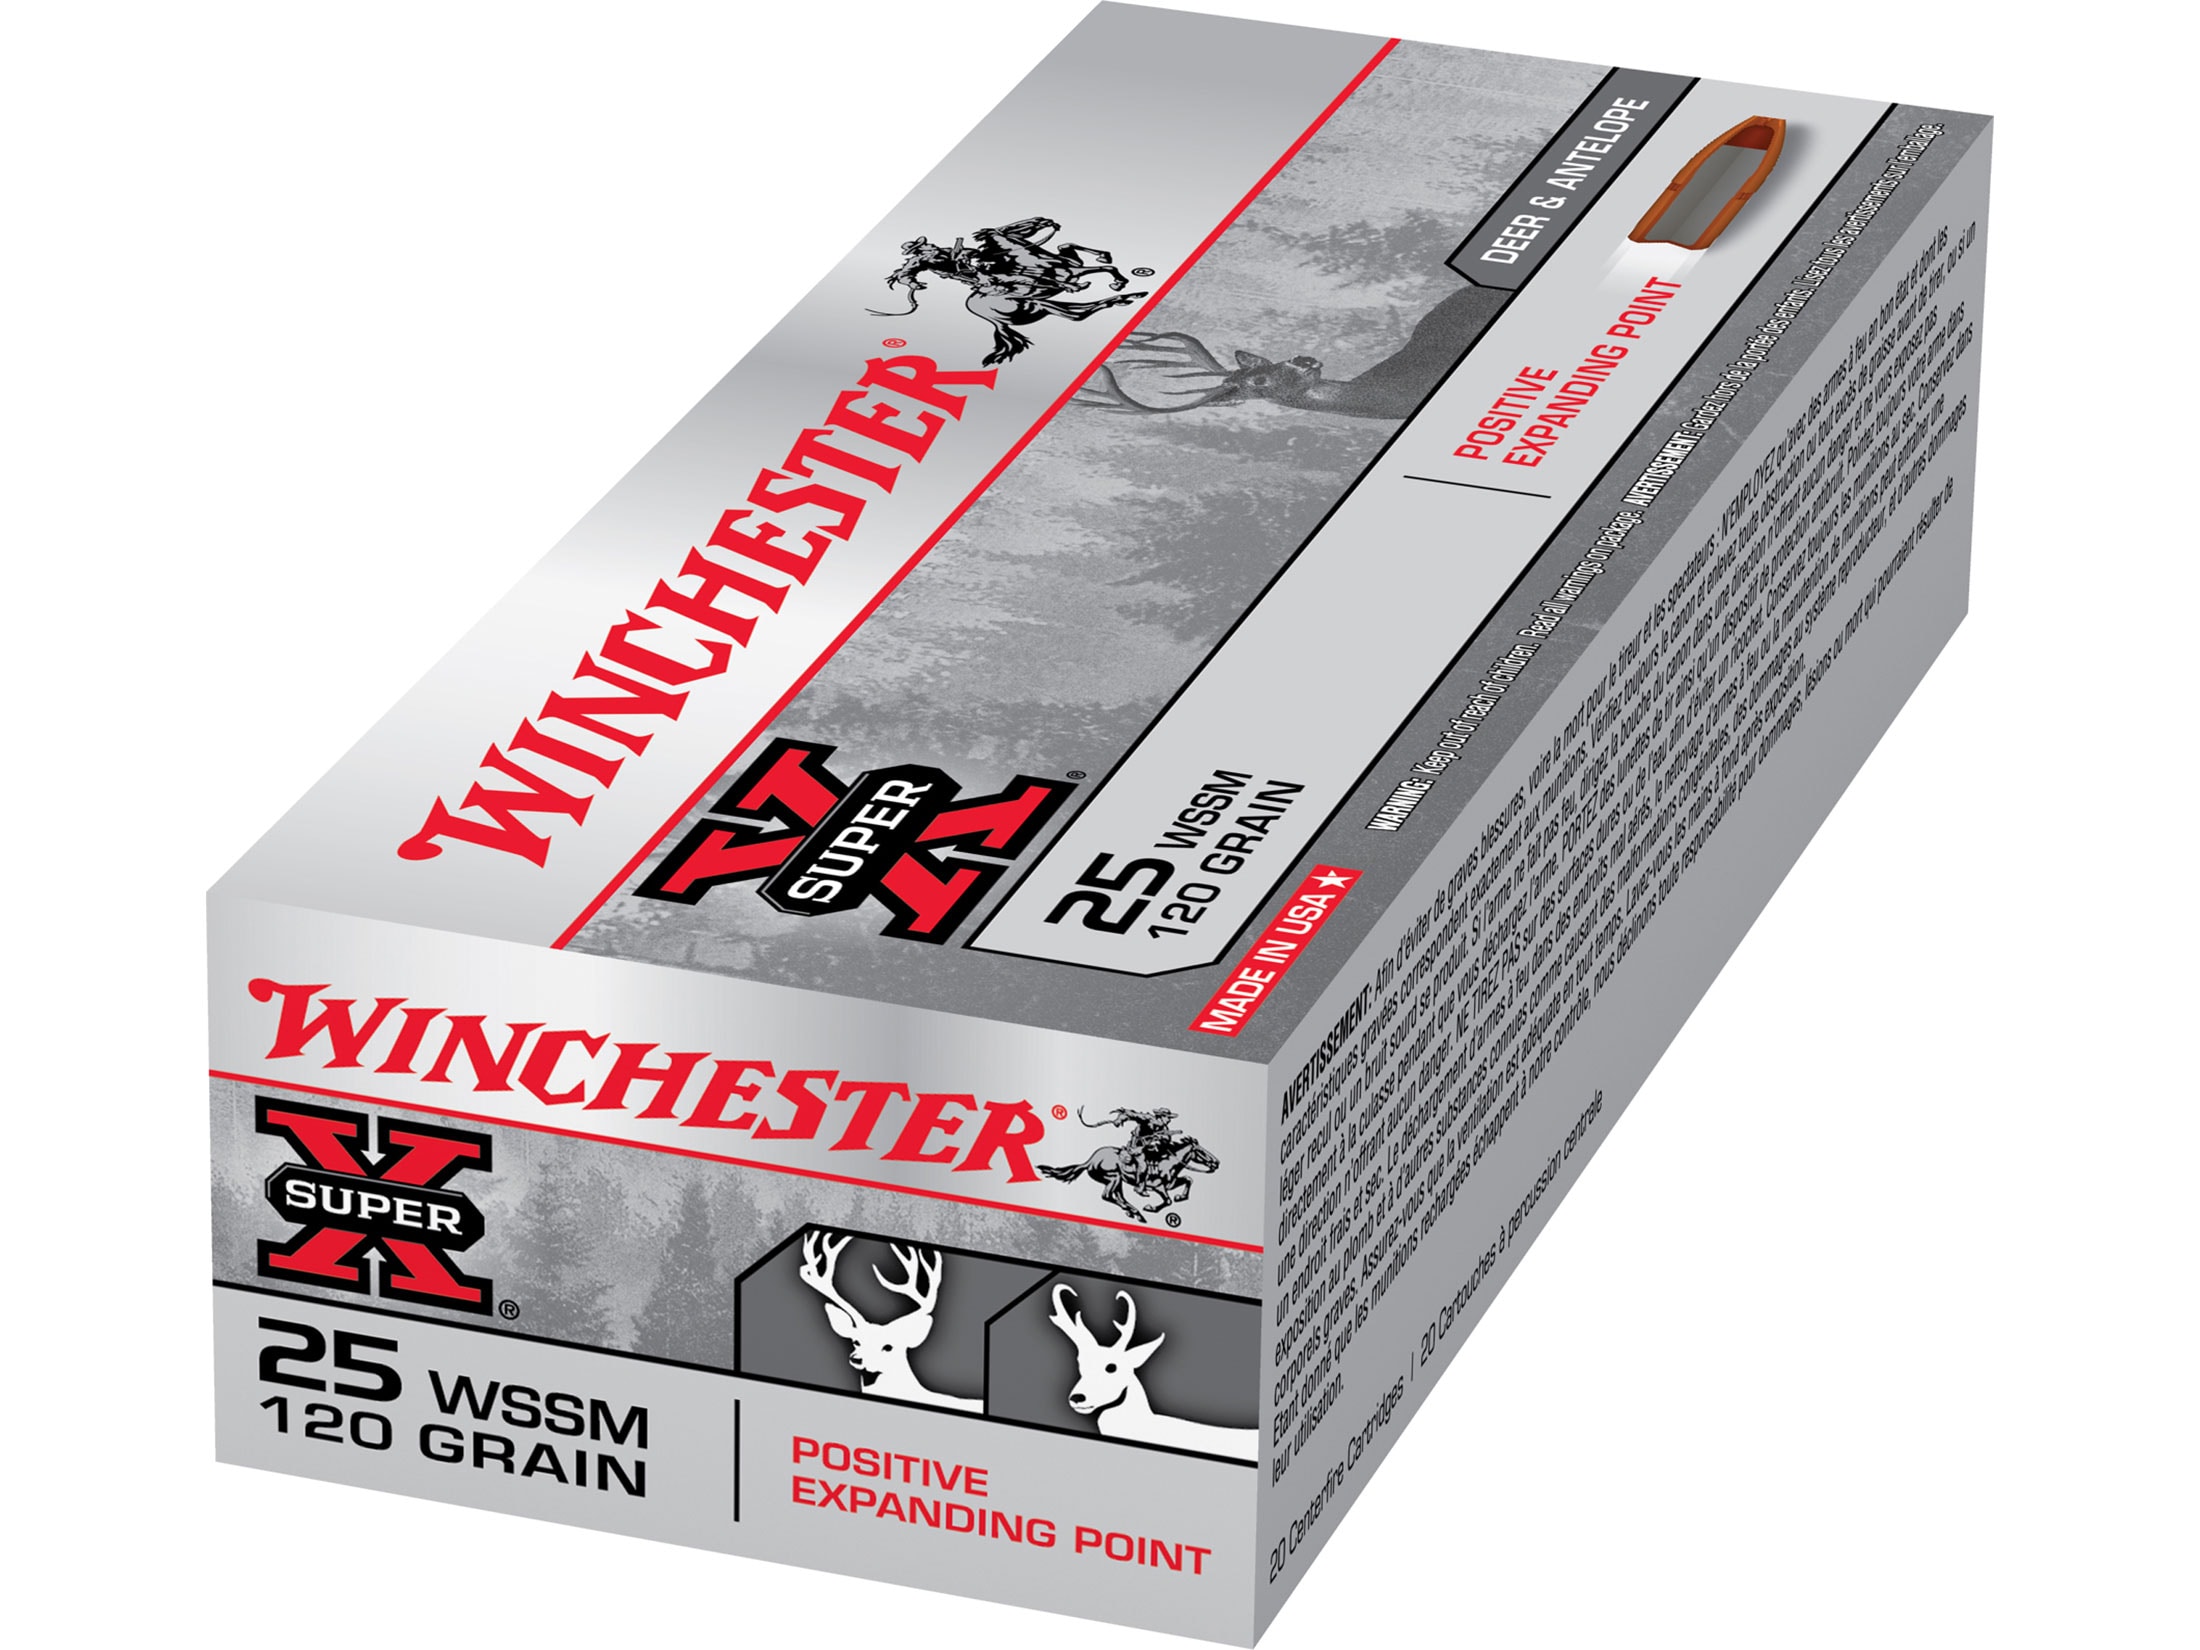 WINCHESTER .25 WINCHESTER SUPER SHORT MAGNUM 50 BRASS CASES